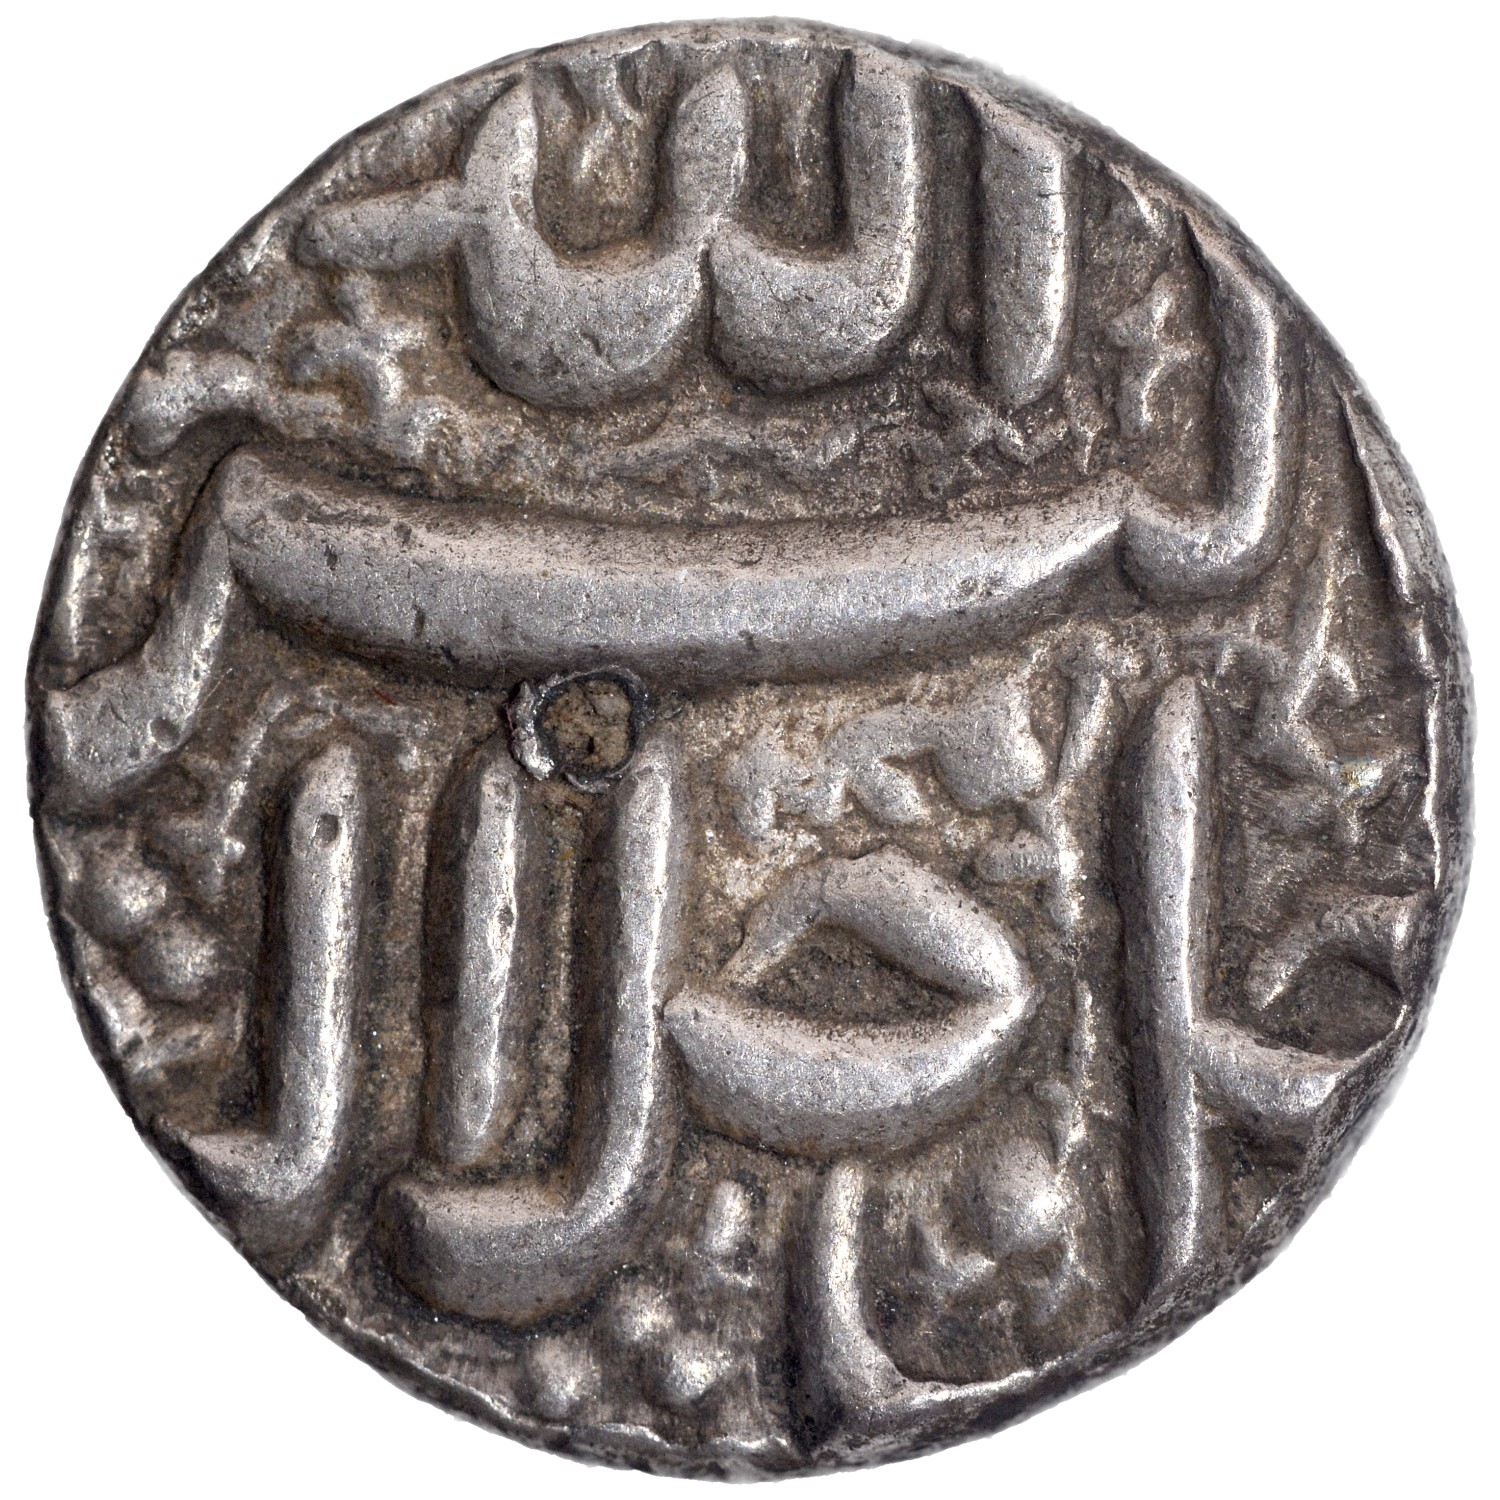 Akbar, Ahmadabad Mint, Silver Rupee, Month Tir, Obv: jalla jalalahu allahu akbar, Rev: persian - Image 2 of 2